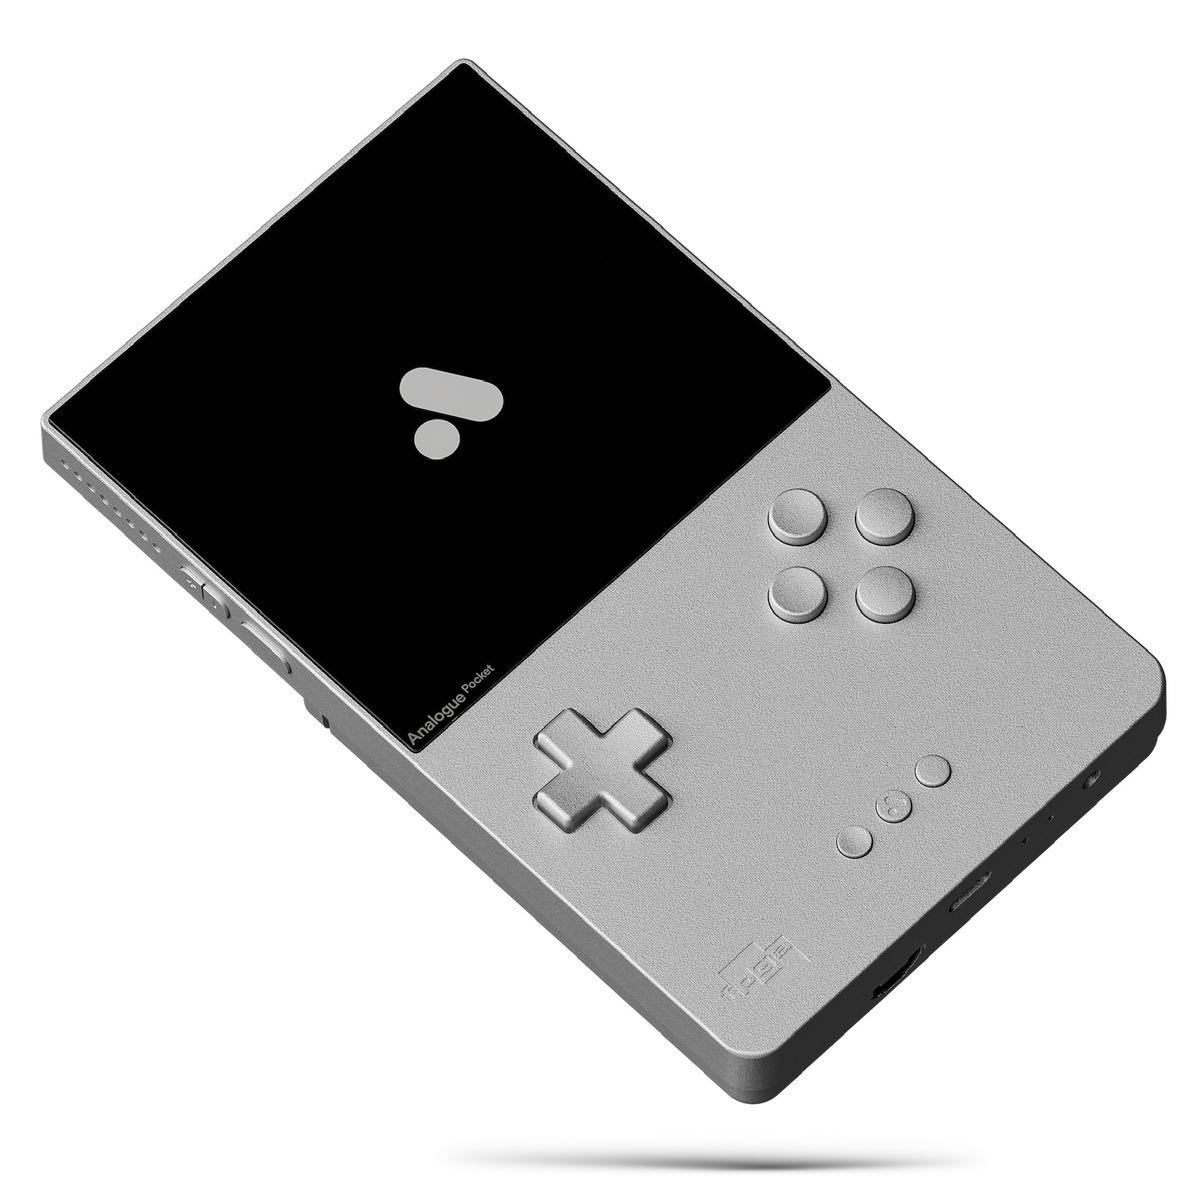 Analogue Pocket White アナログポケットホワイト - Nintendo Switch